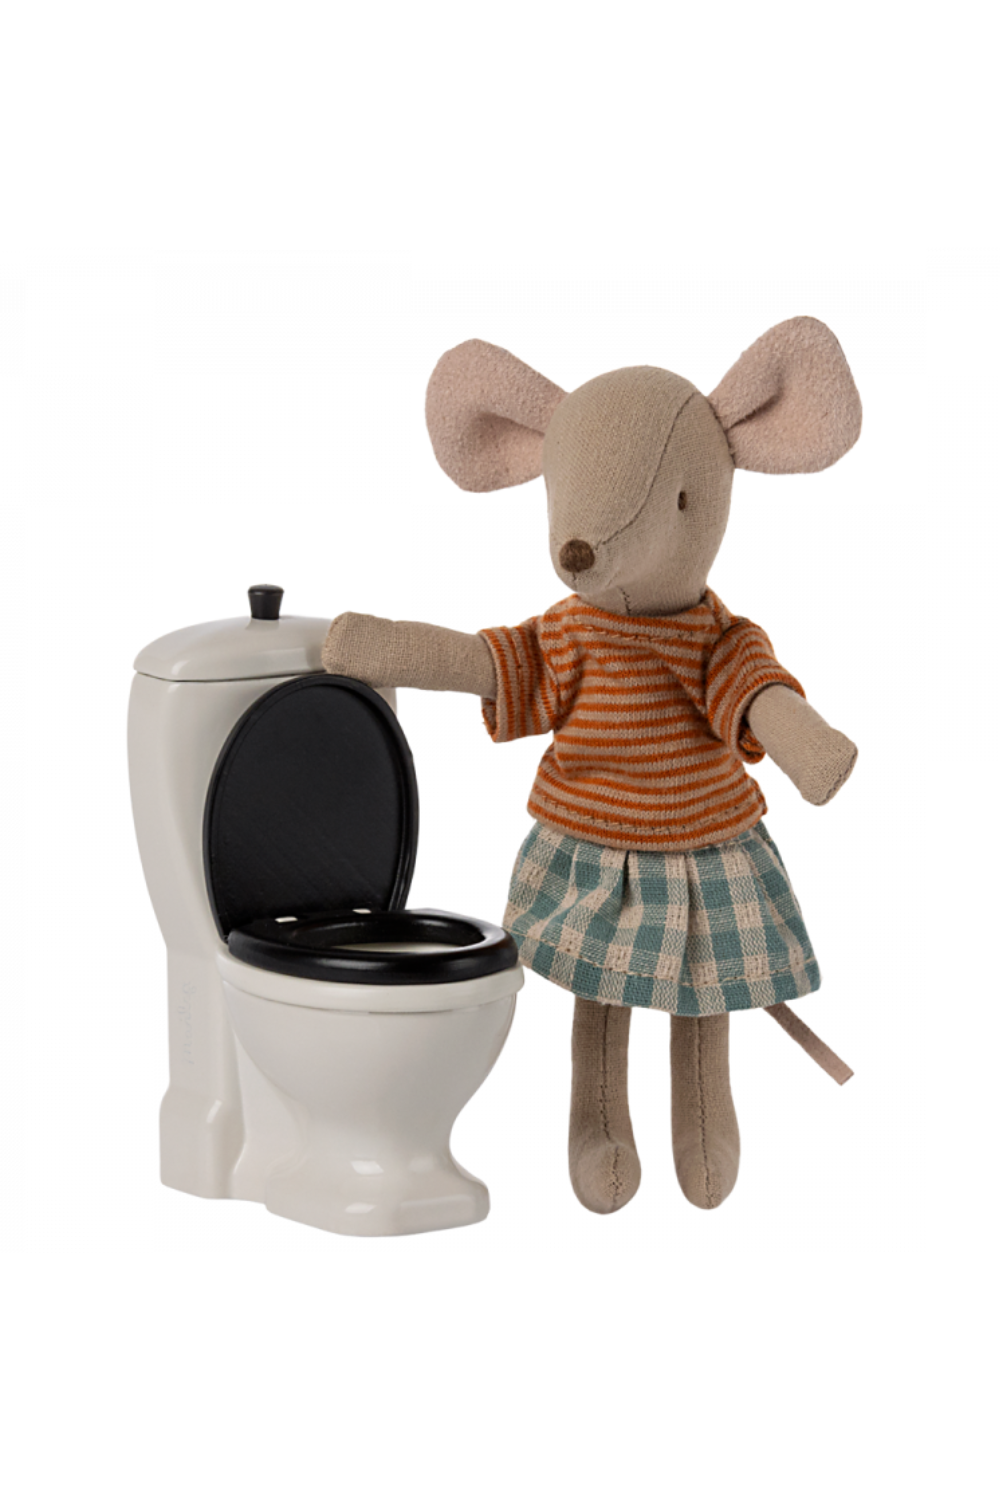 Maileg Mouse Size Toilet (smaller): Dollhouse Bathroom Decor